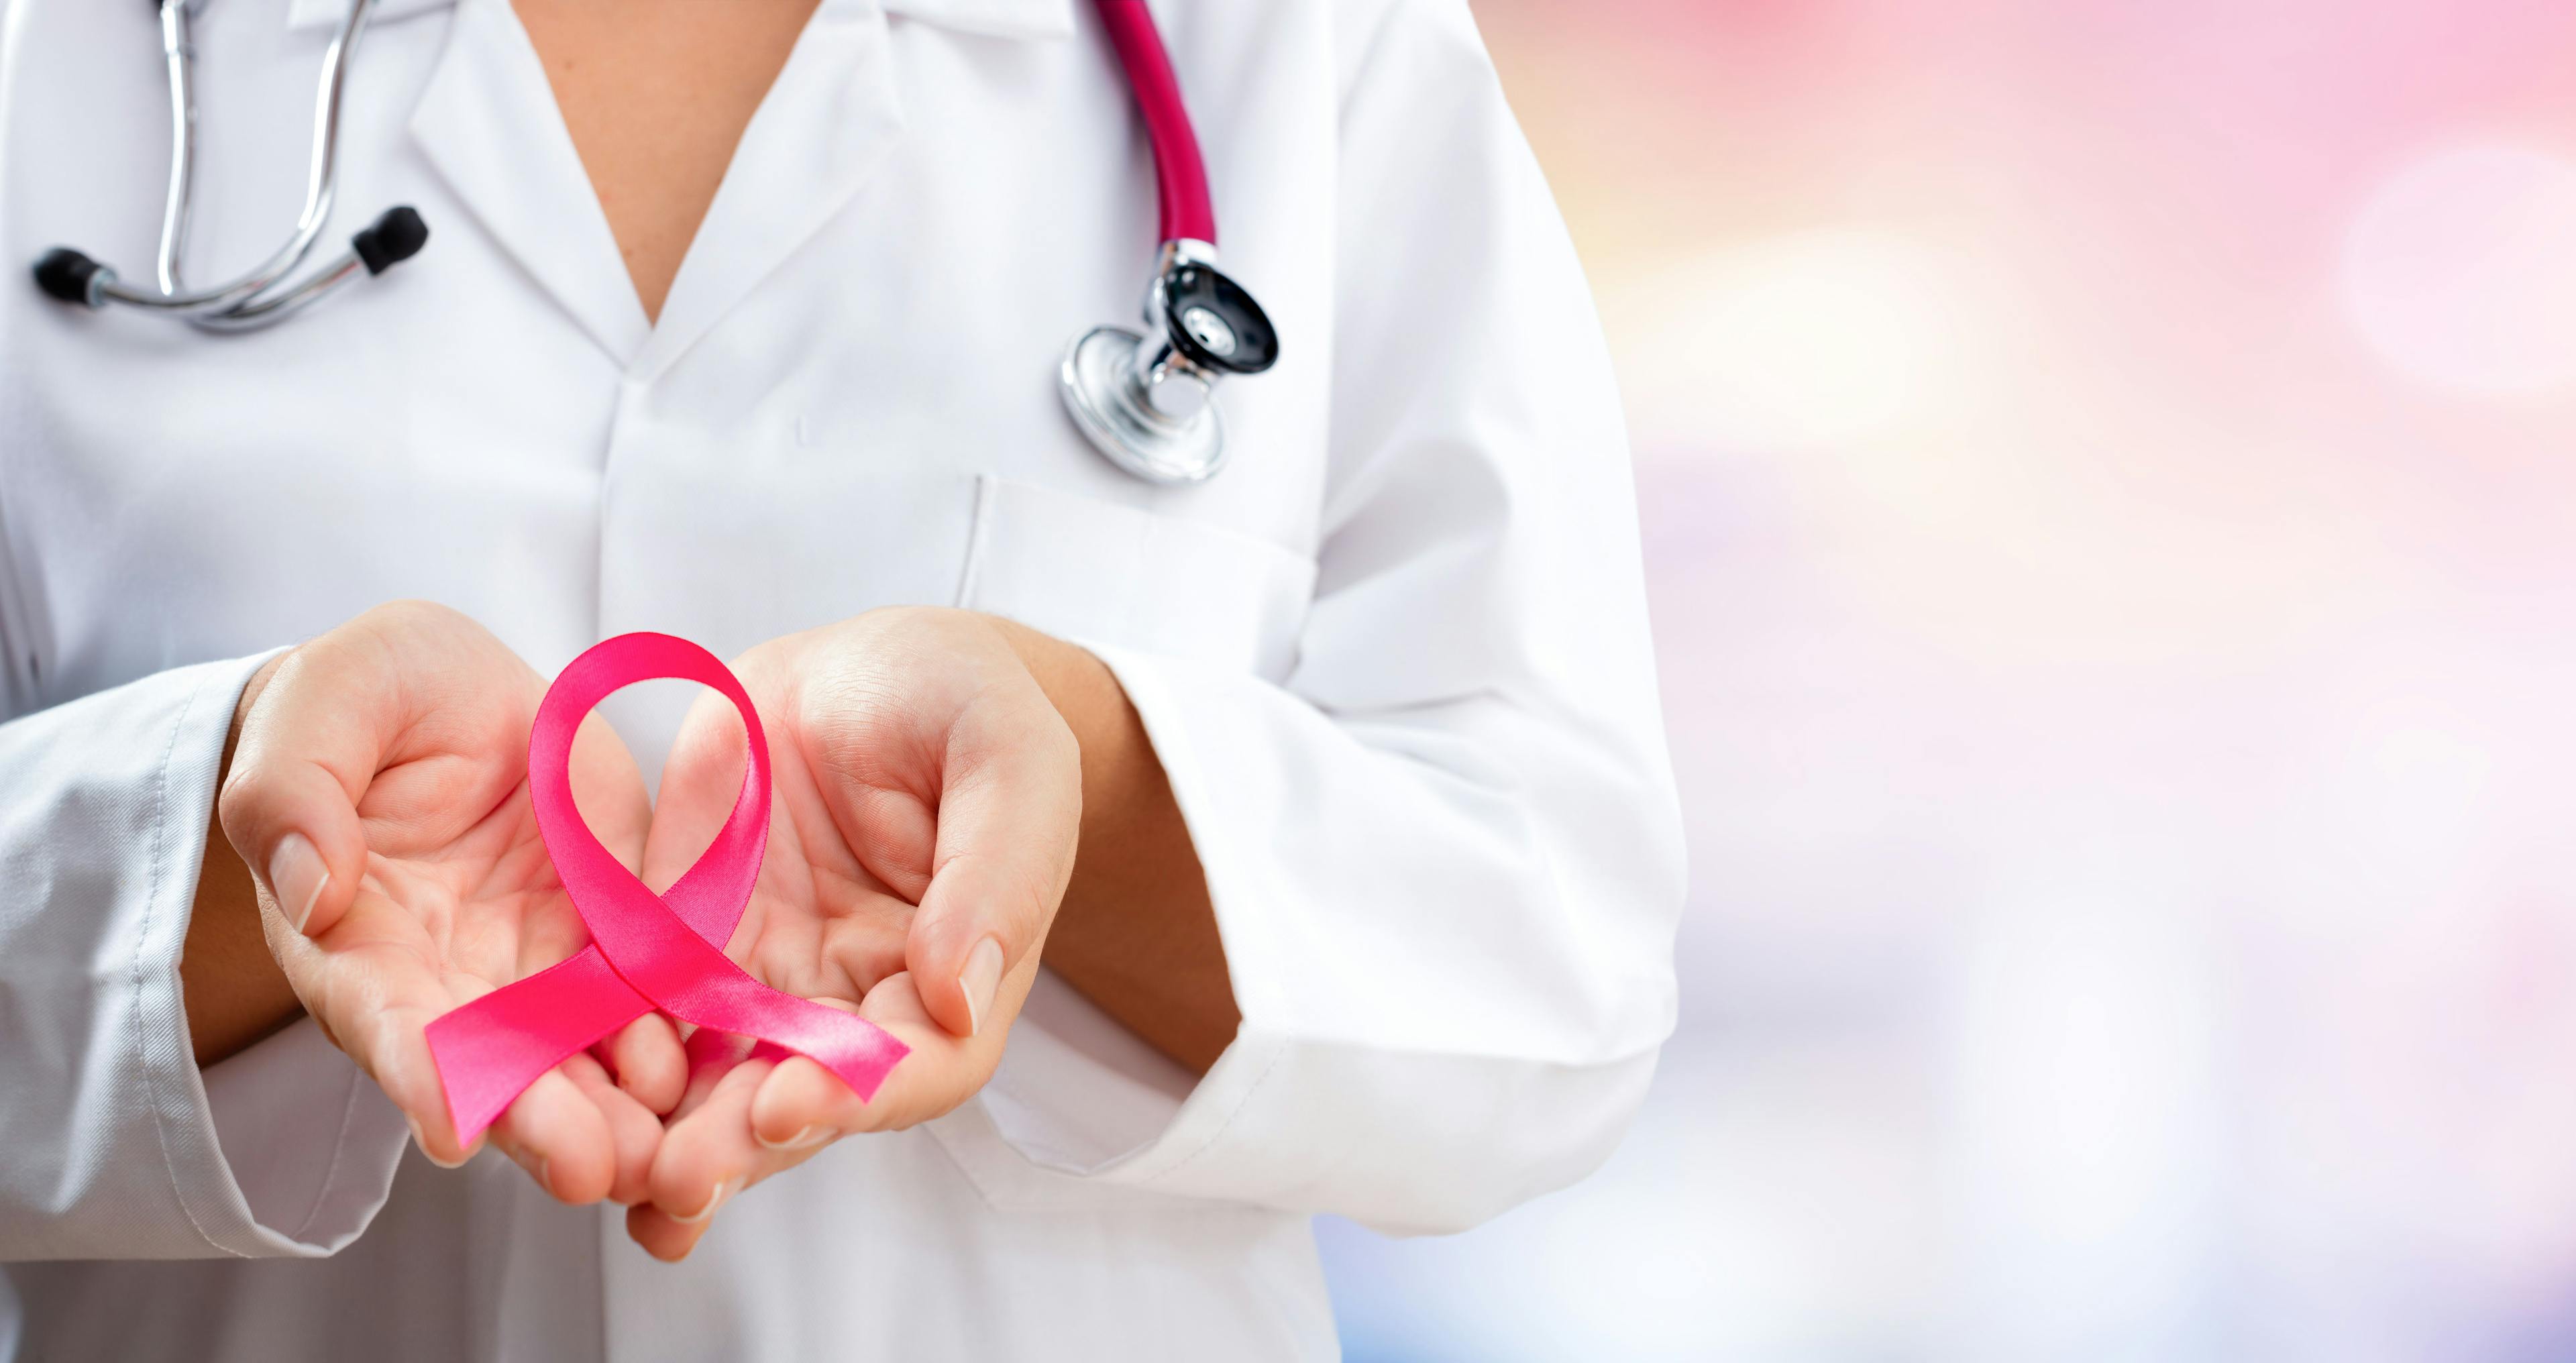 breast cancer | Image credit: Romolo Tavani - stock.adobe.com